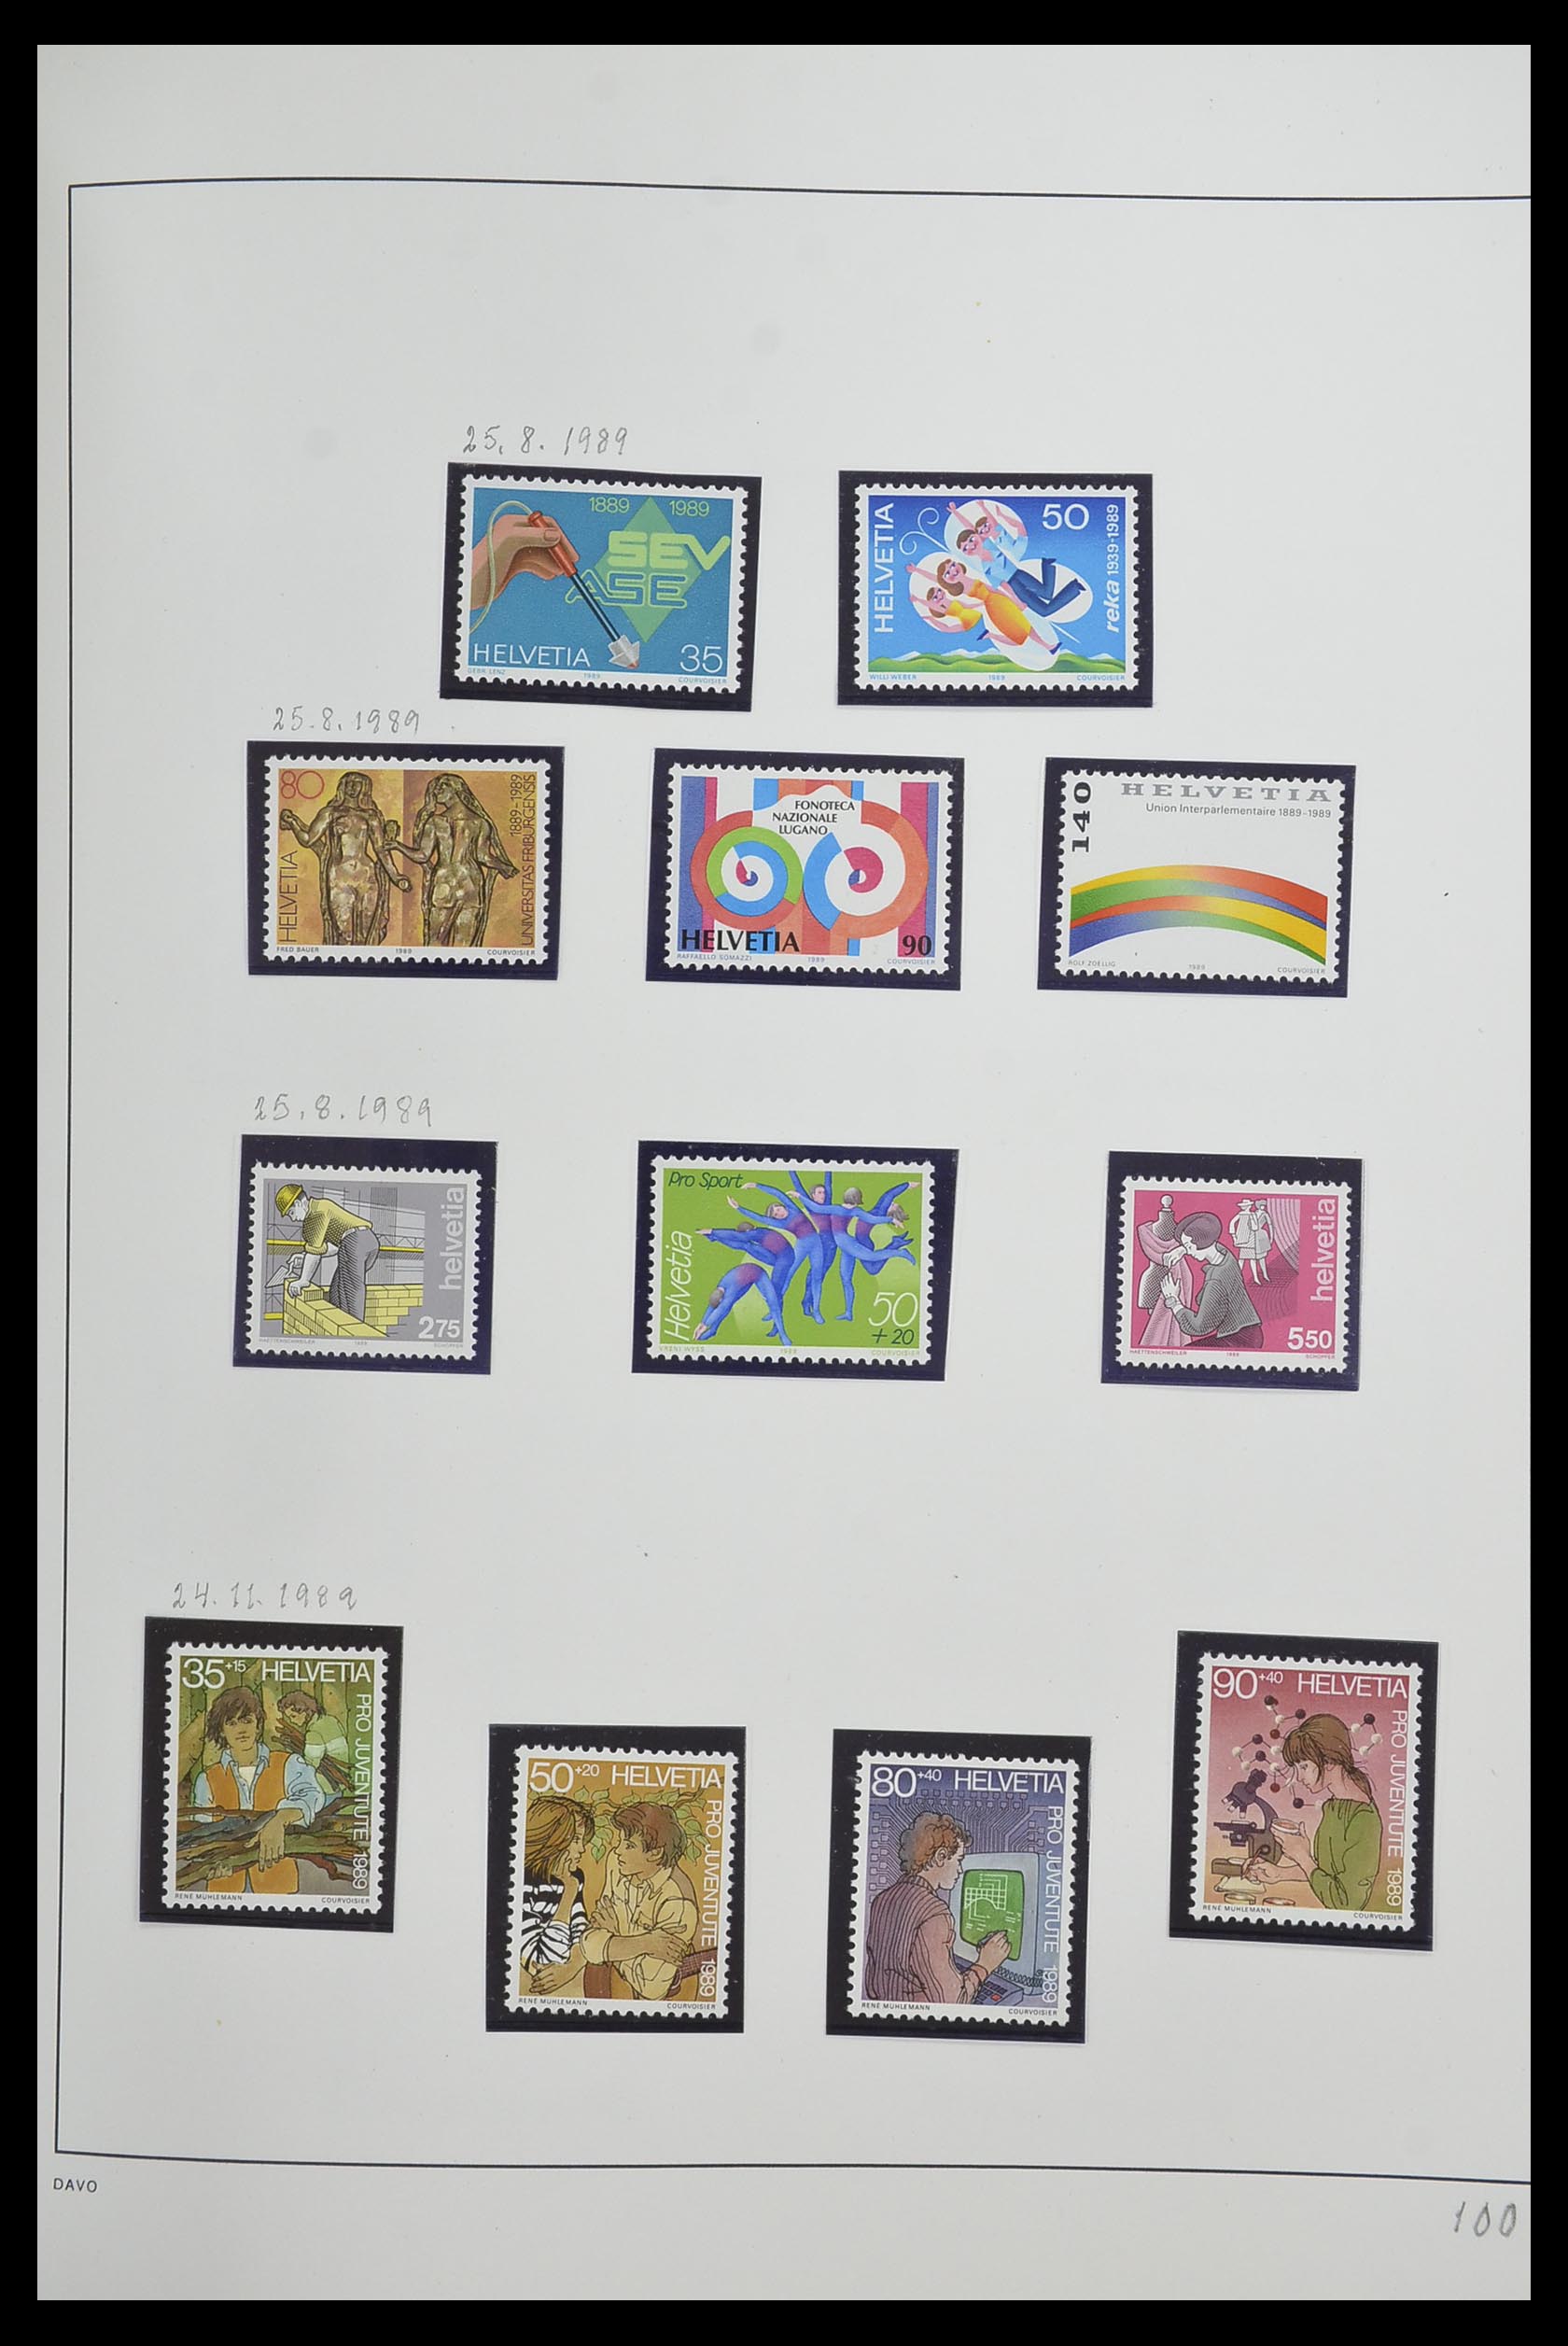 33556 102 - Stamp collection 33556 Switzerland 1862-2000.